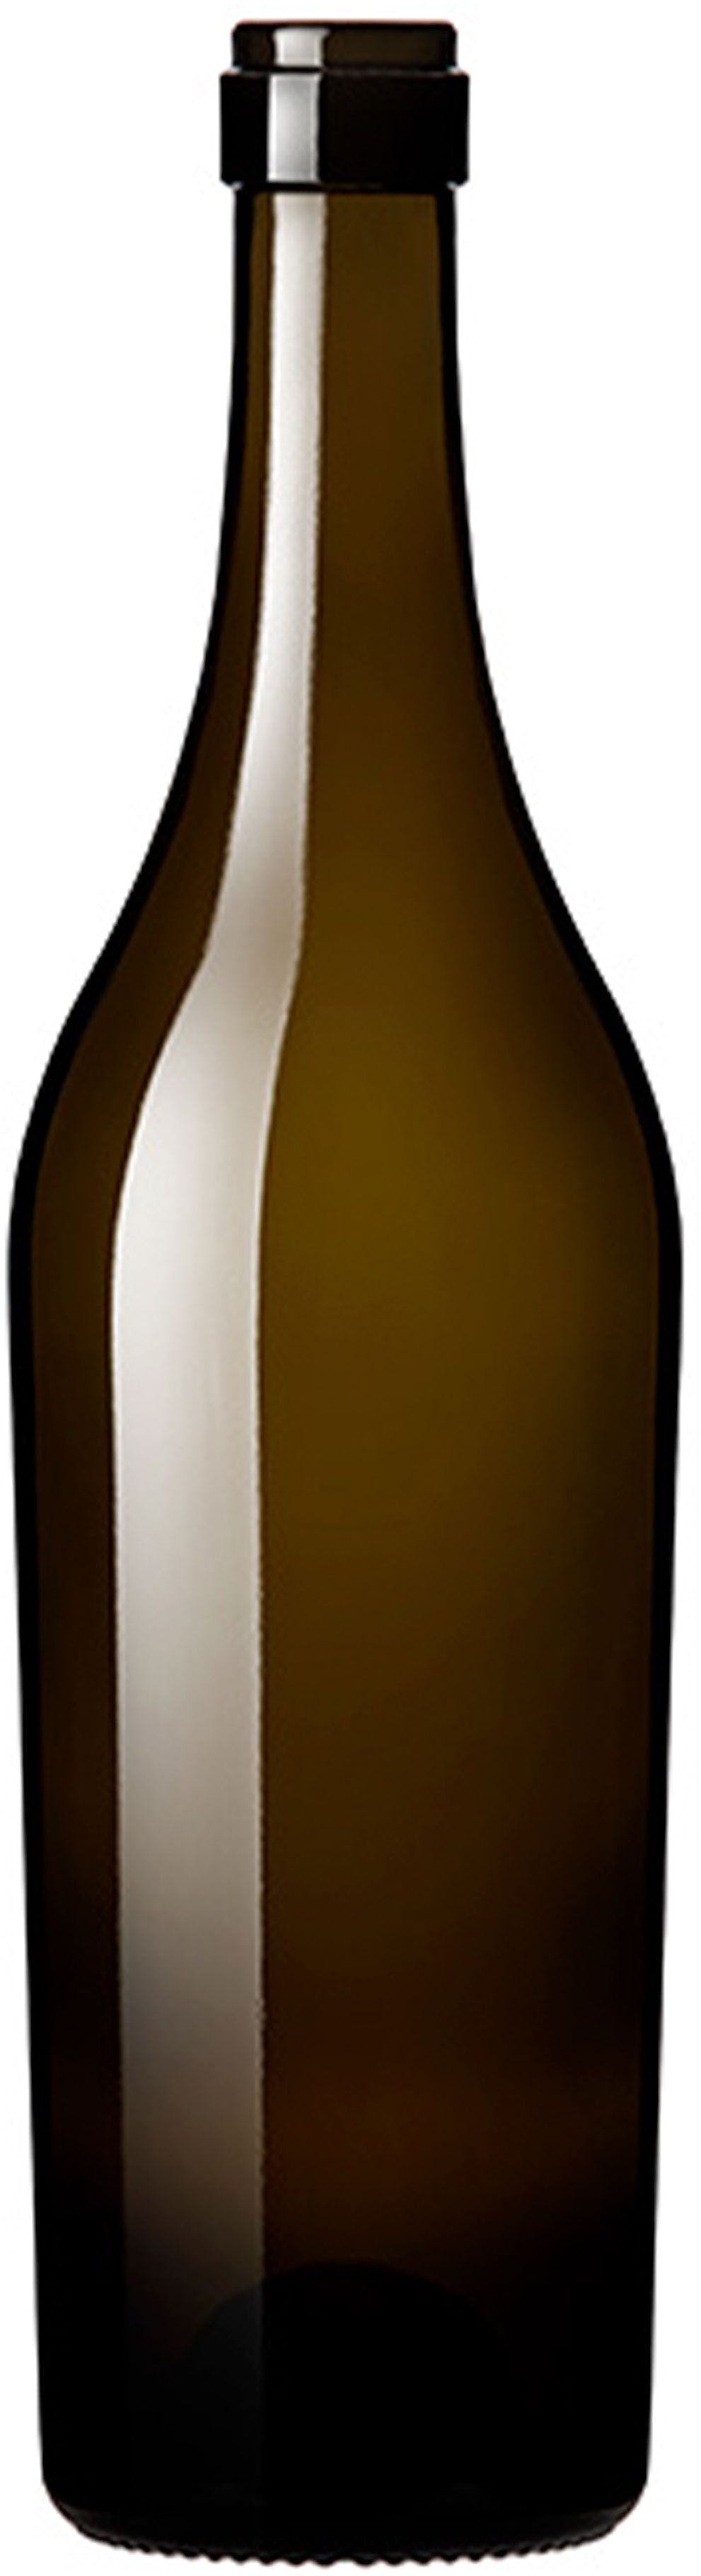 Bottle BORGOÑA  NEW MADLEINE 750 ml BG-Cork